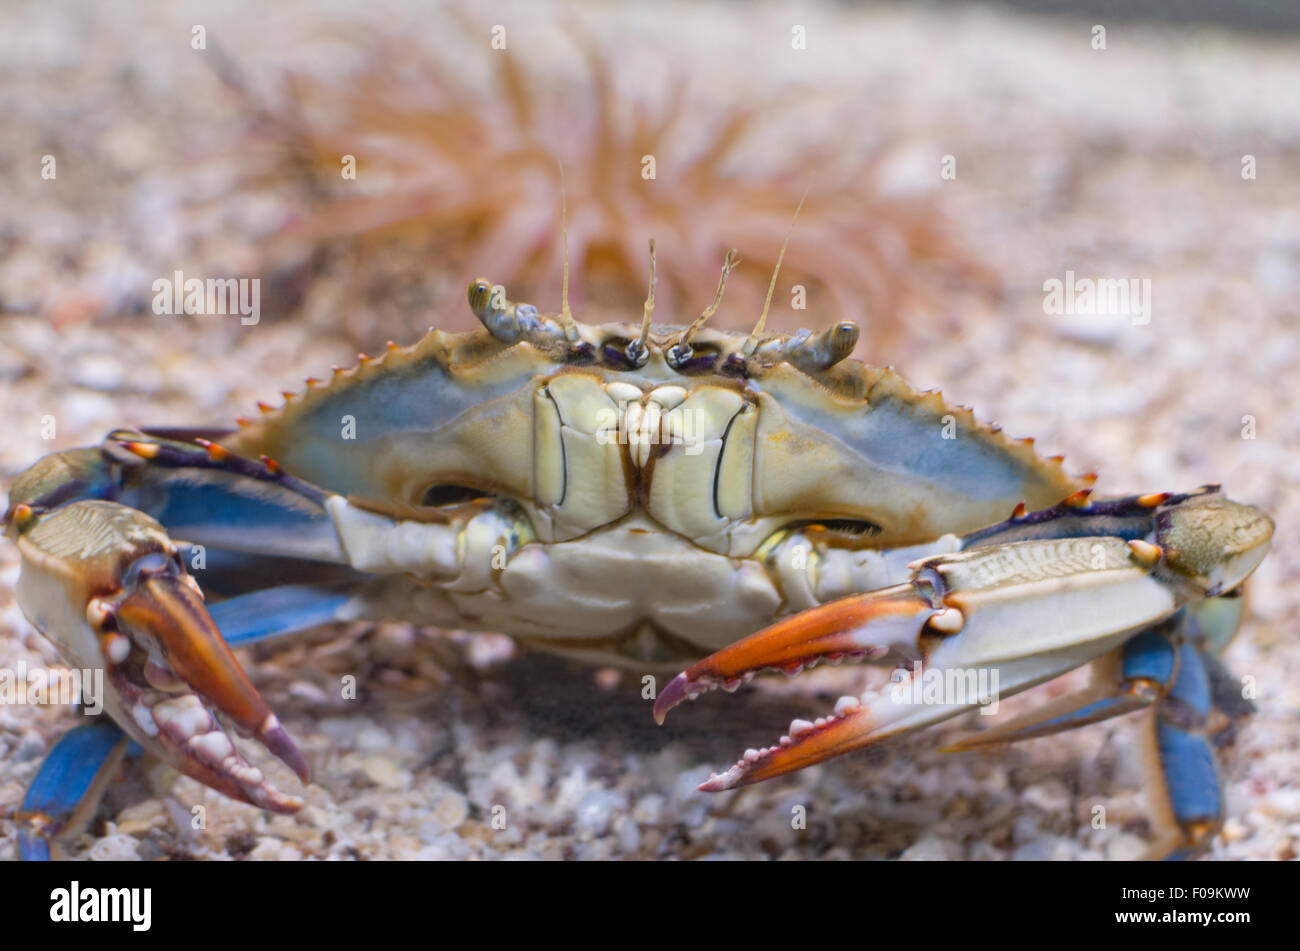 Atlantic Blue Crab with Orange Pincers Front Closeup Stock Photo